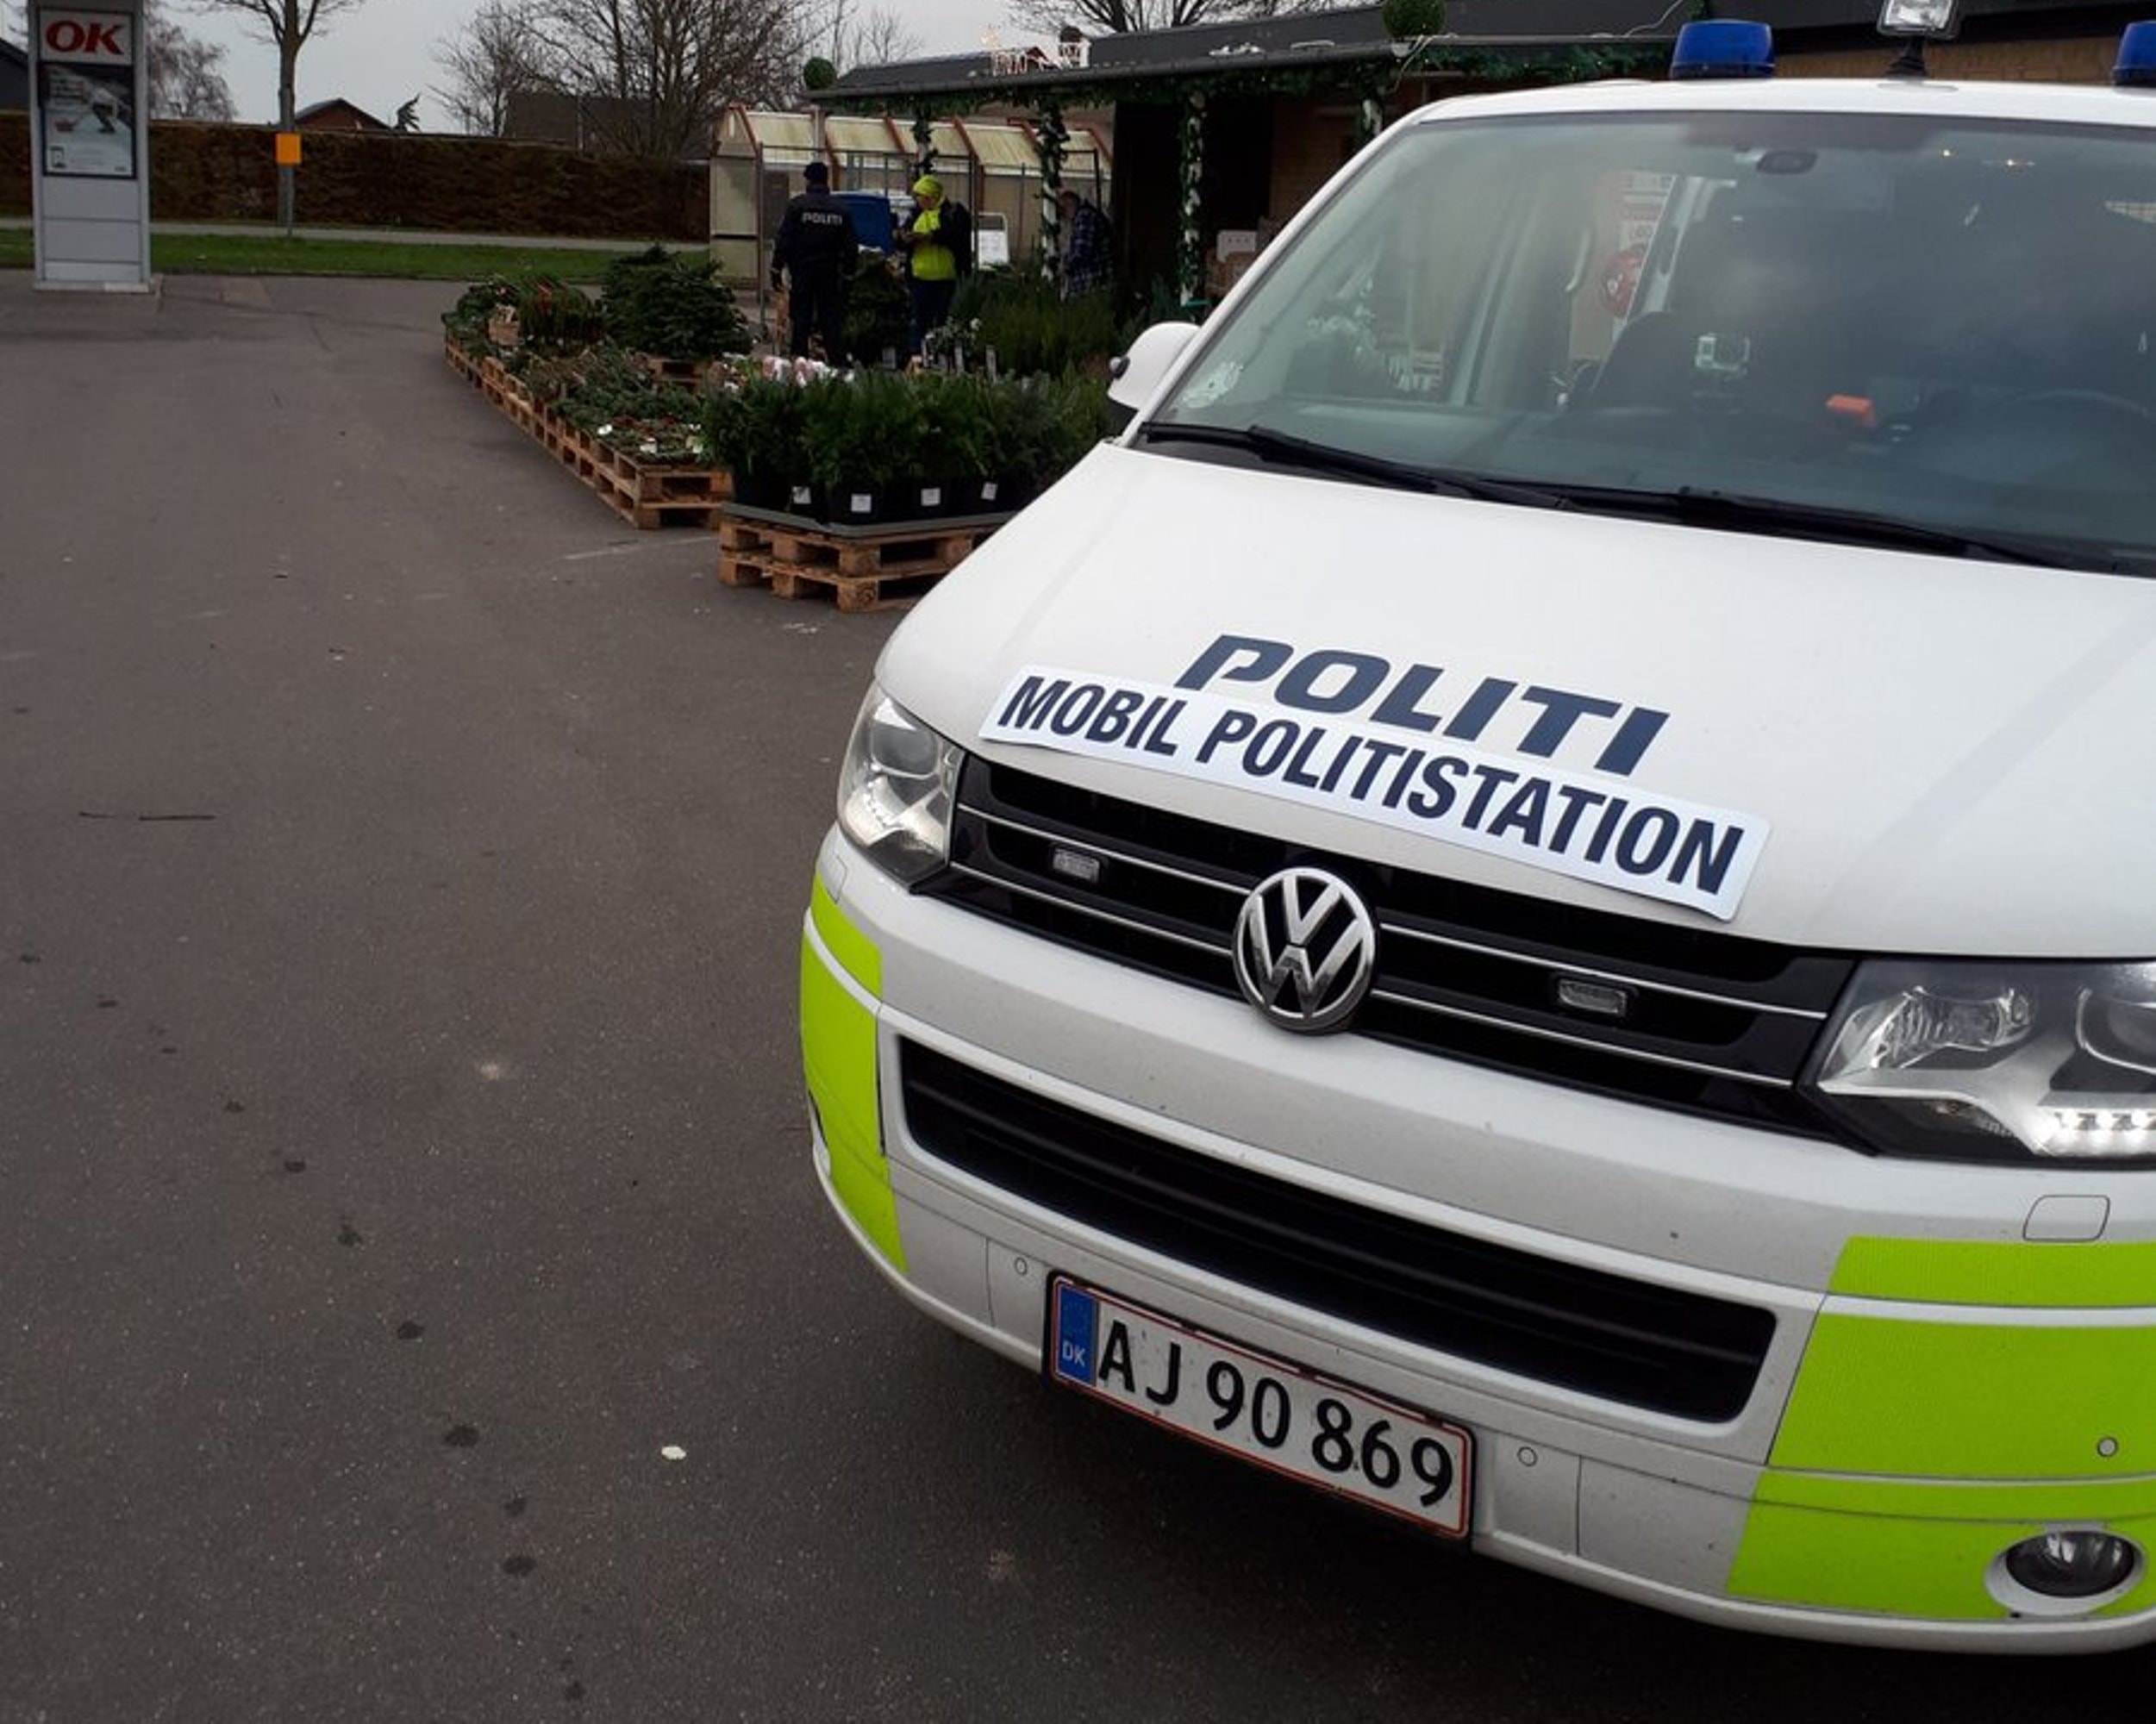 Mobil politistationen i Horslunde